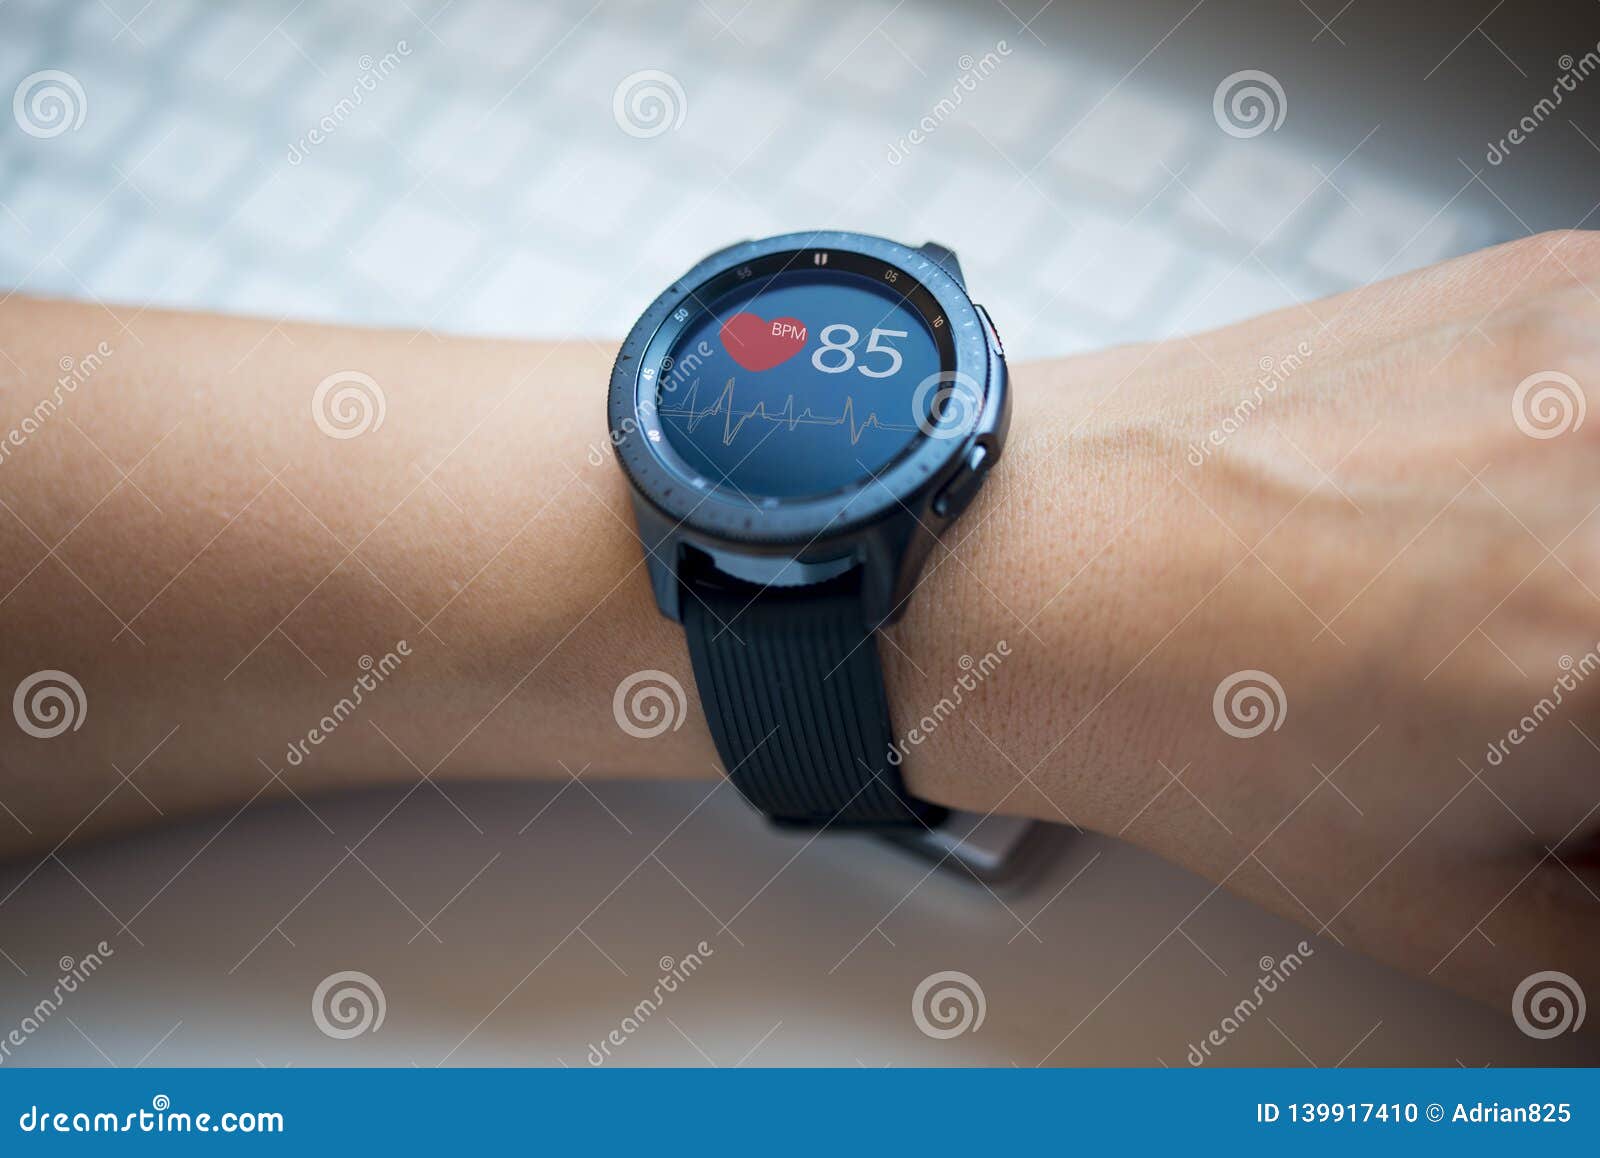 smart watch at womanÃ¢â¬â¢s hand checking heart rate at the office